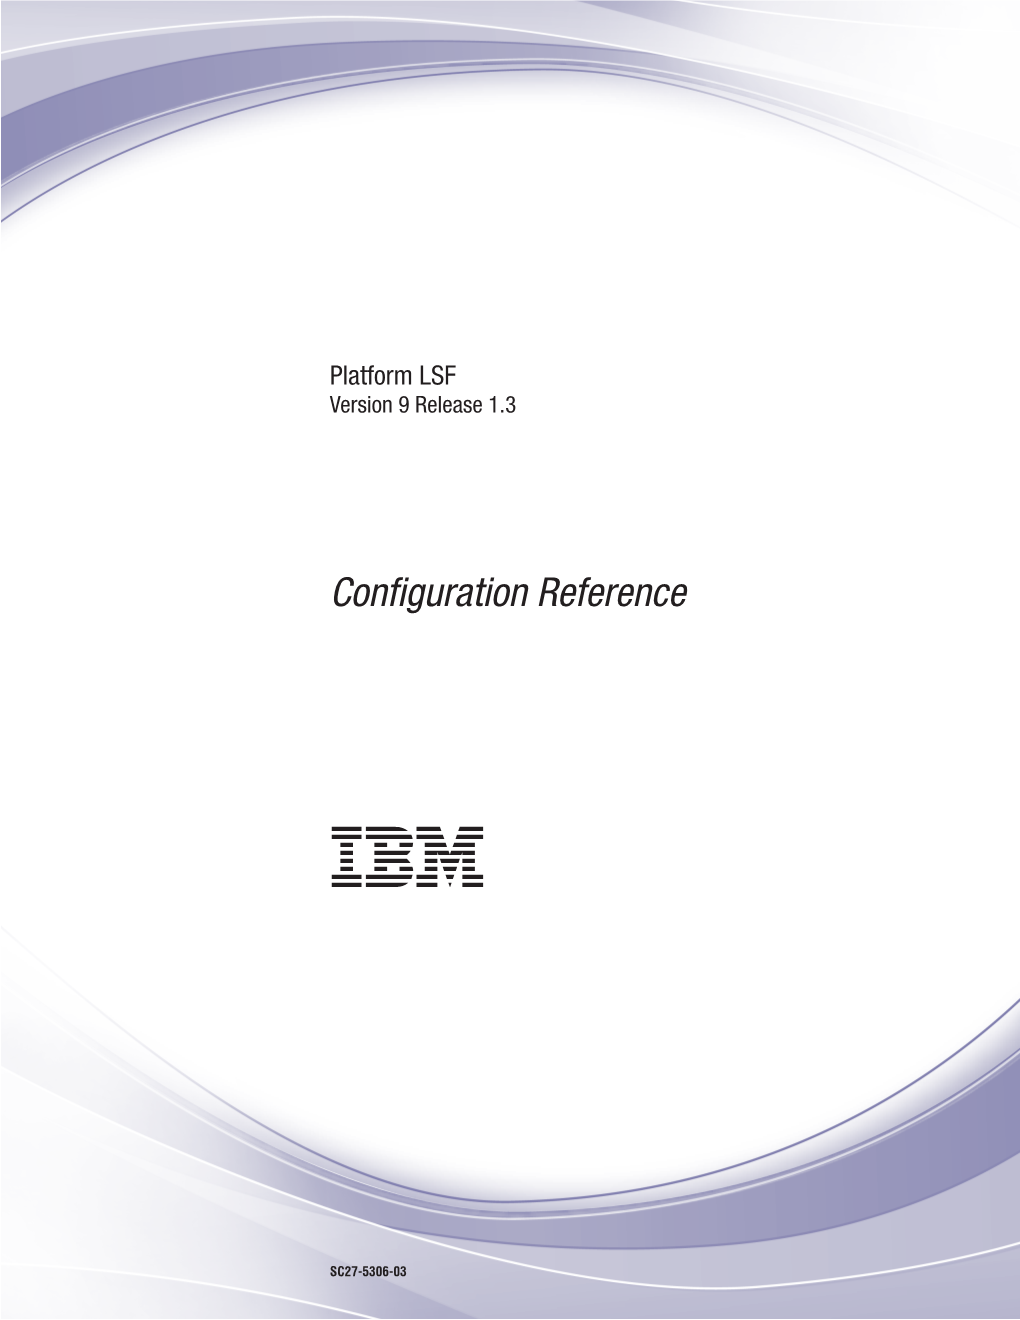 Platform LSF Configuration Reference Chapter 1